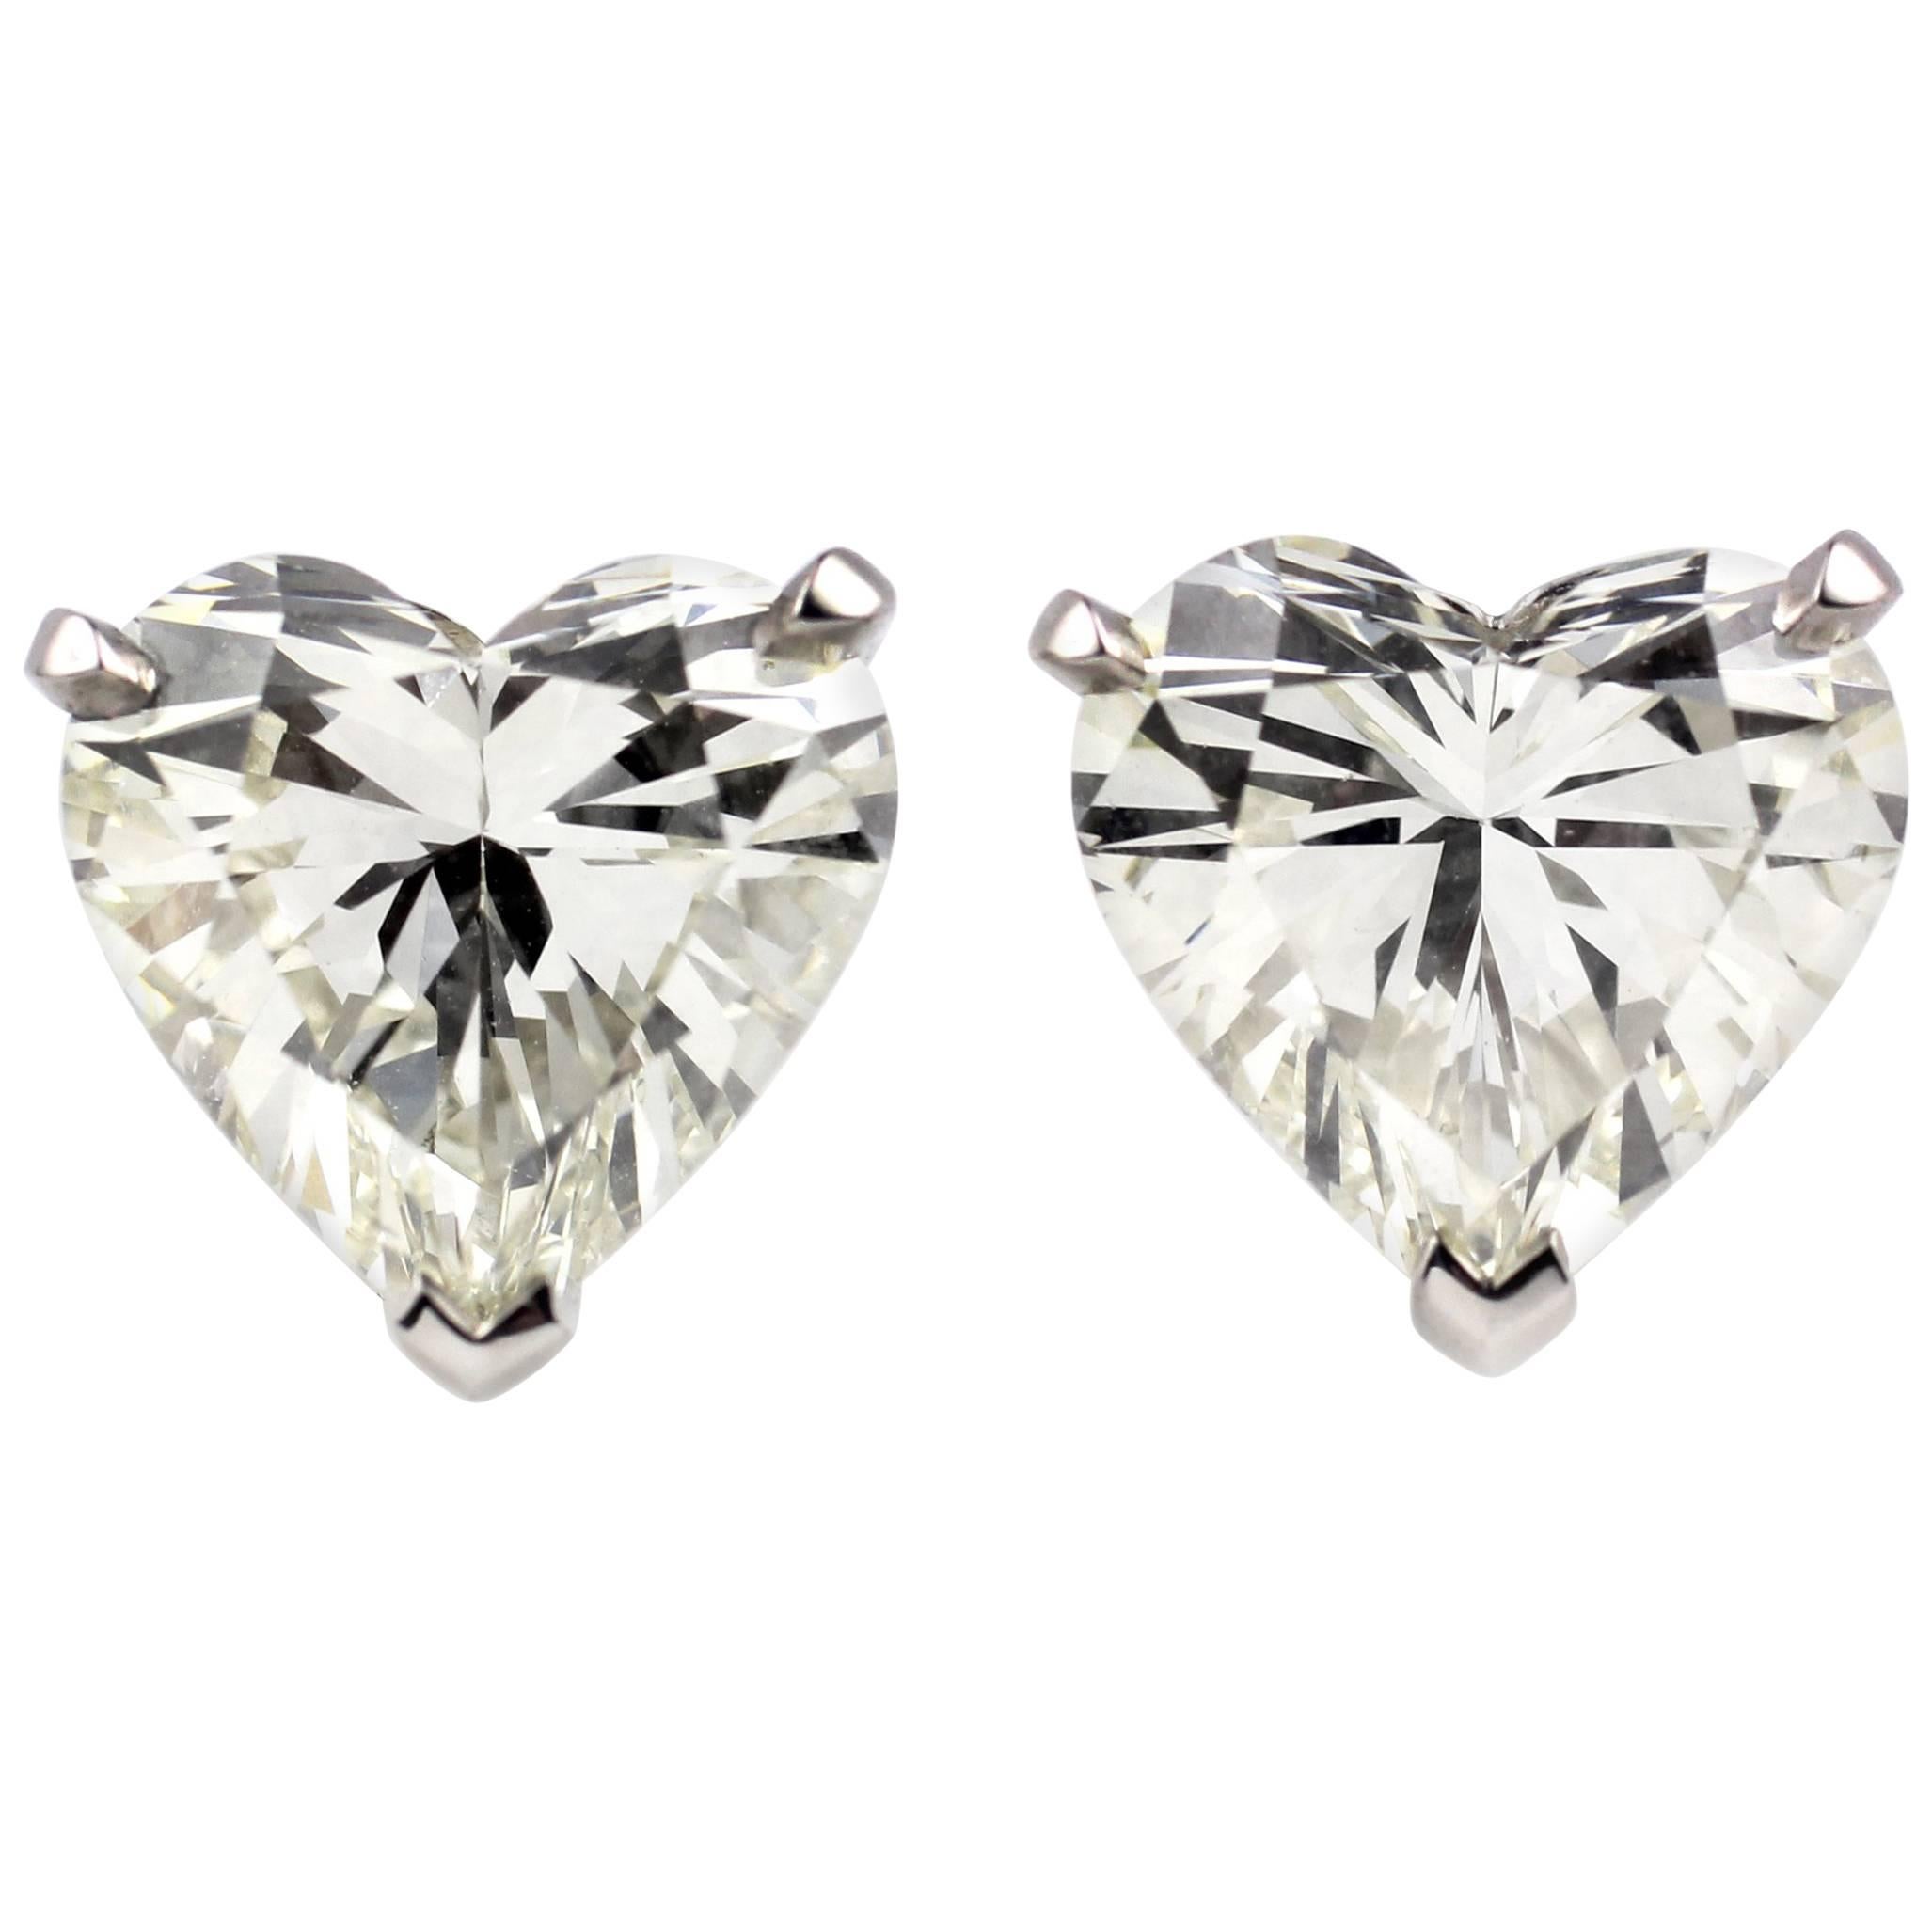 Julius Cohen 6.22 Carat Heart Shaped Diamond Earrings